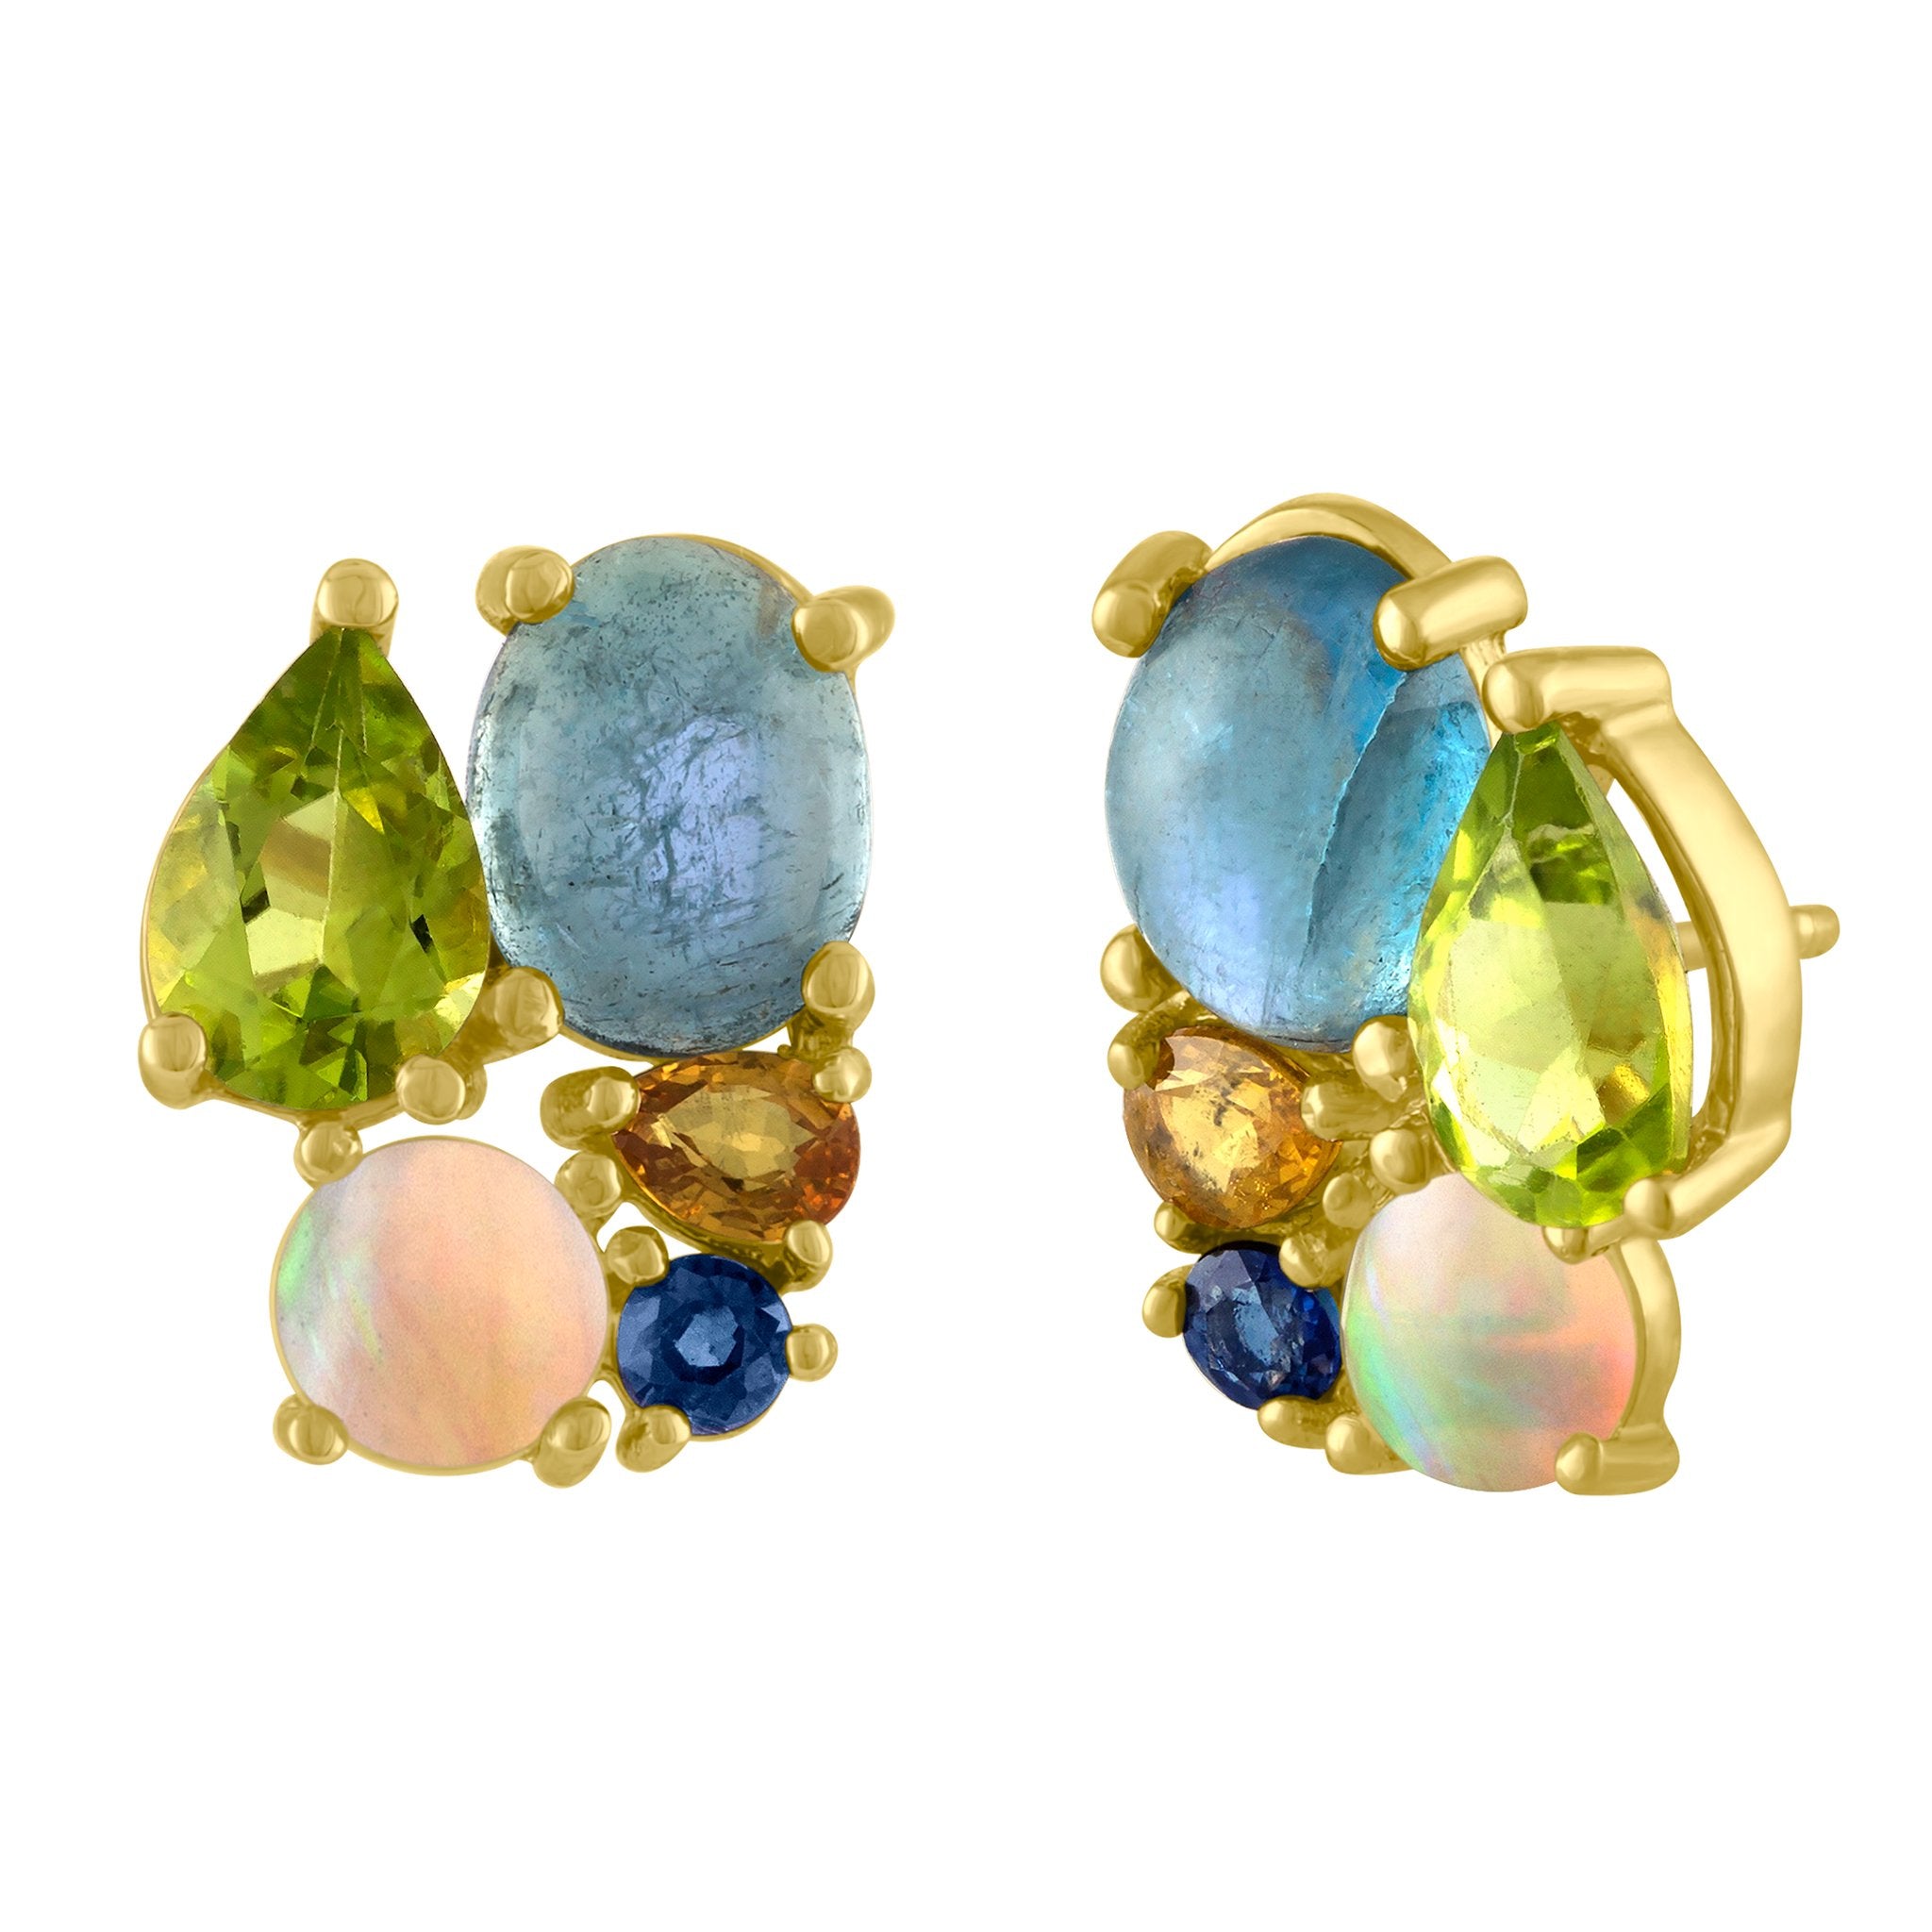 Bon Bon Stud Earrings: 14k Gold, Peridot, Acqua, Opal, Yellow Pear Sapphire, Blue Sapphire